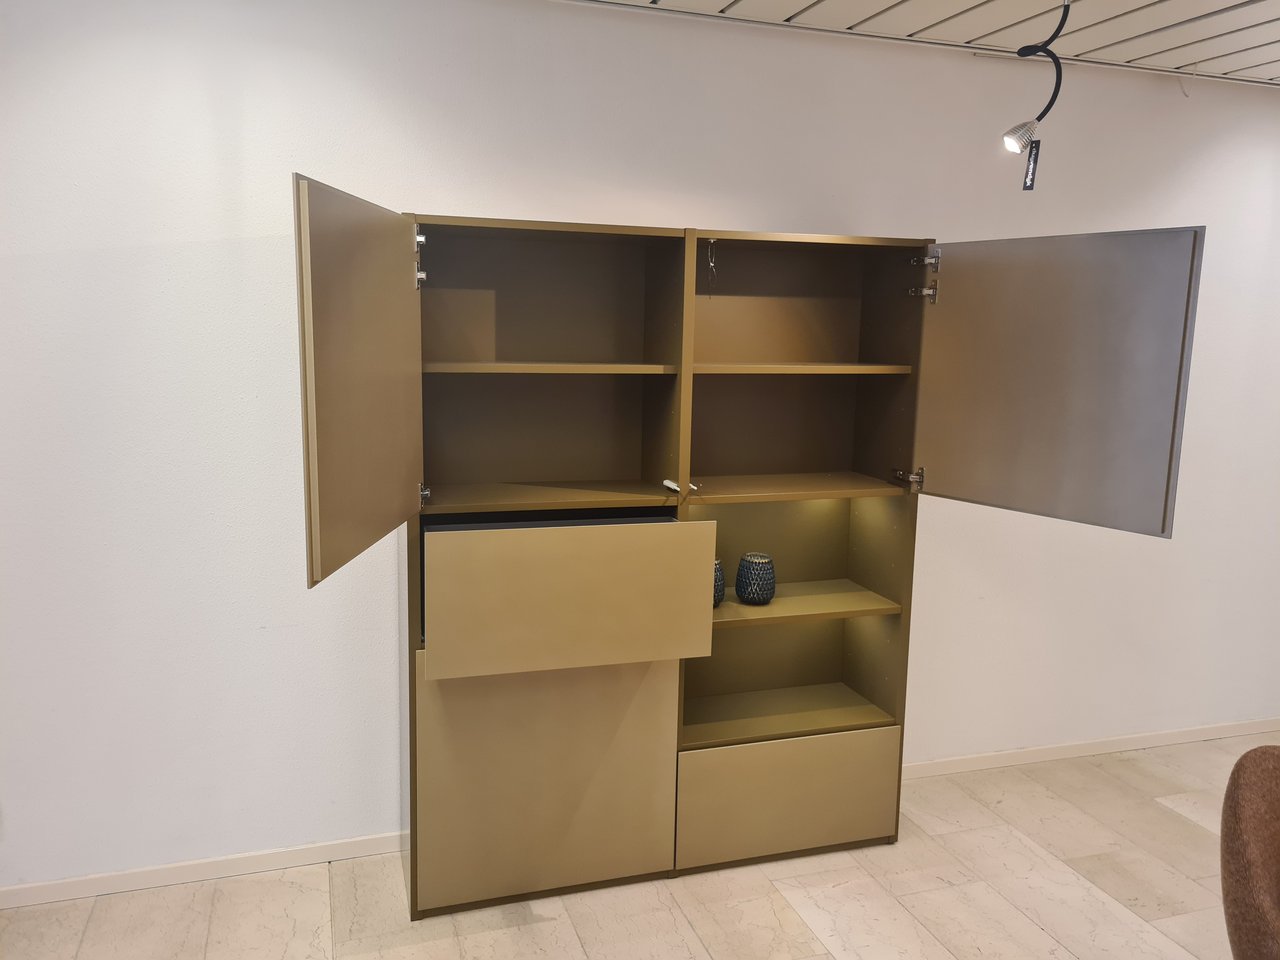 Image 4 of Interlubke Studimo cabinet